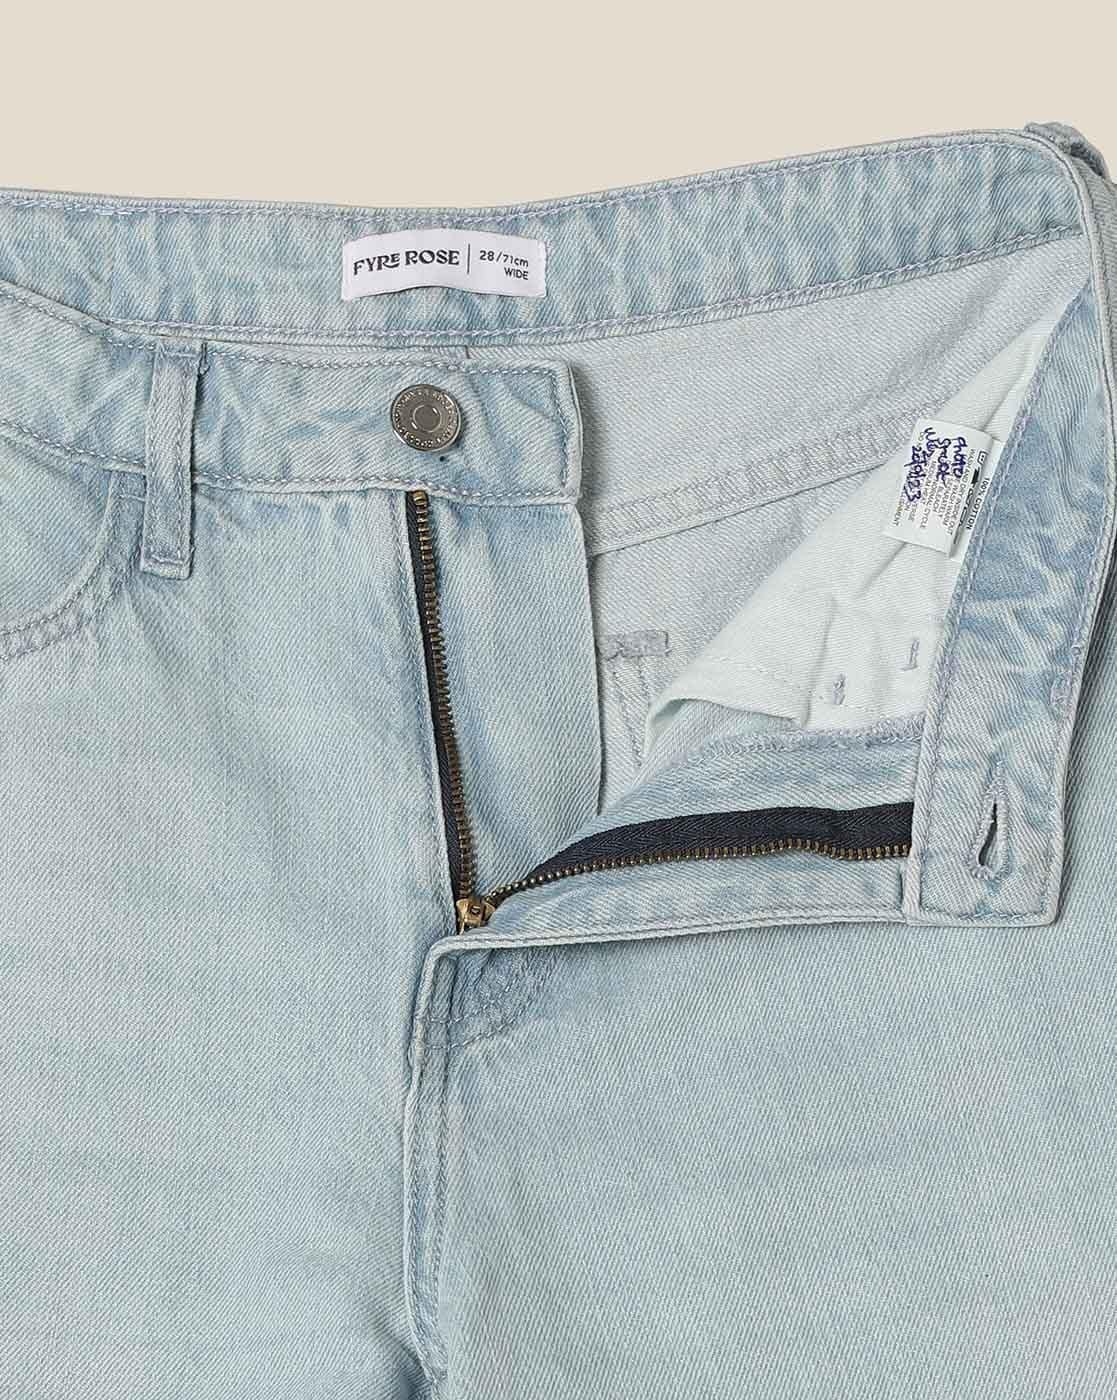 Women's Light Wash Jeans